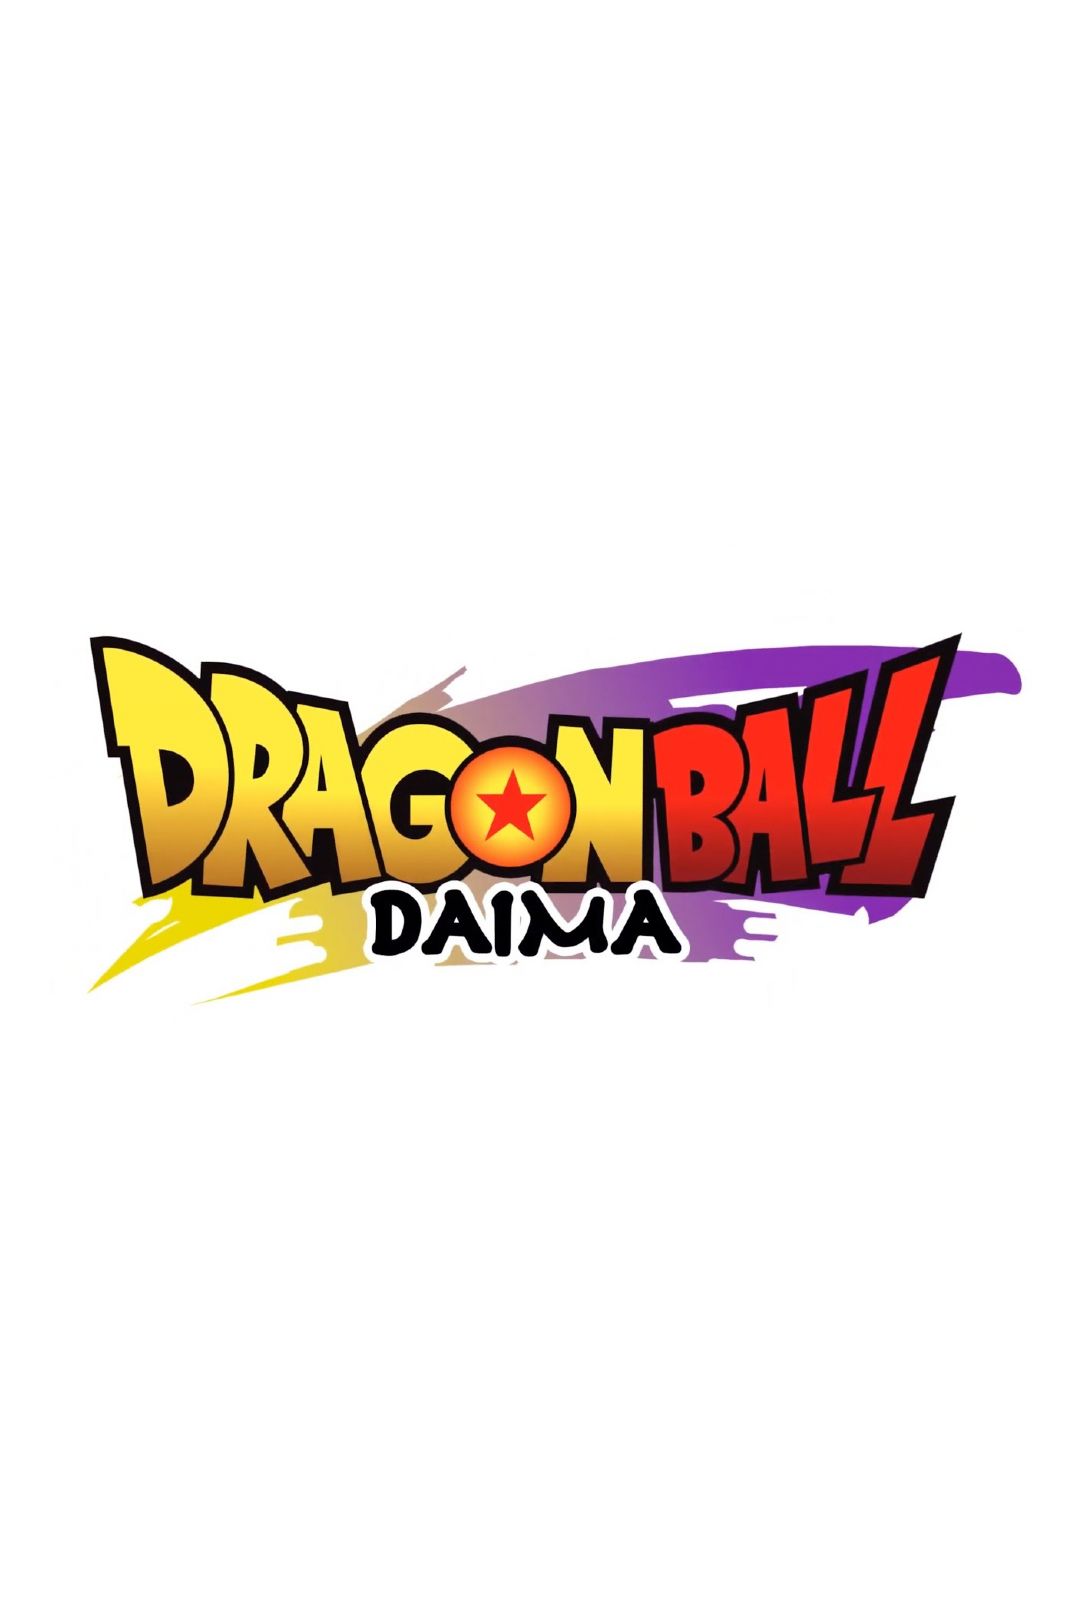 Dragon Ball' creator Akira Toriyama dead at 68 from hematoma - pennlive.com